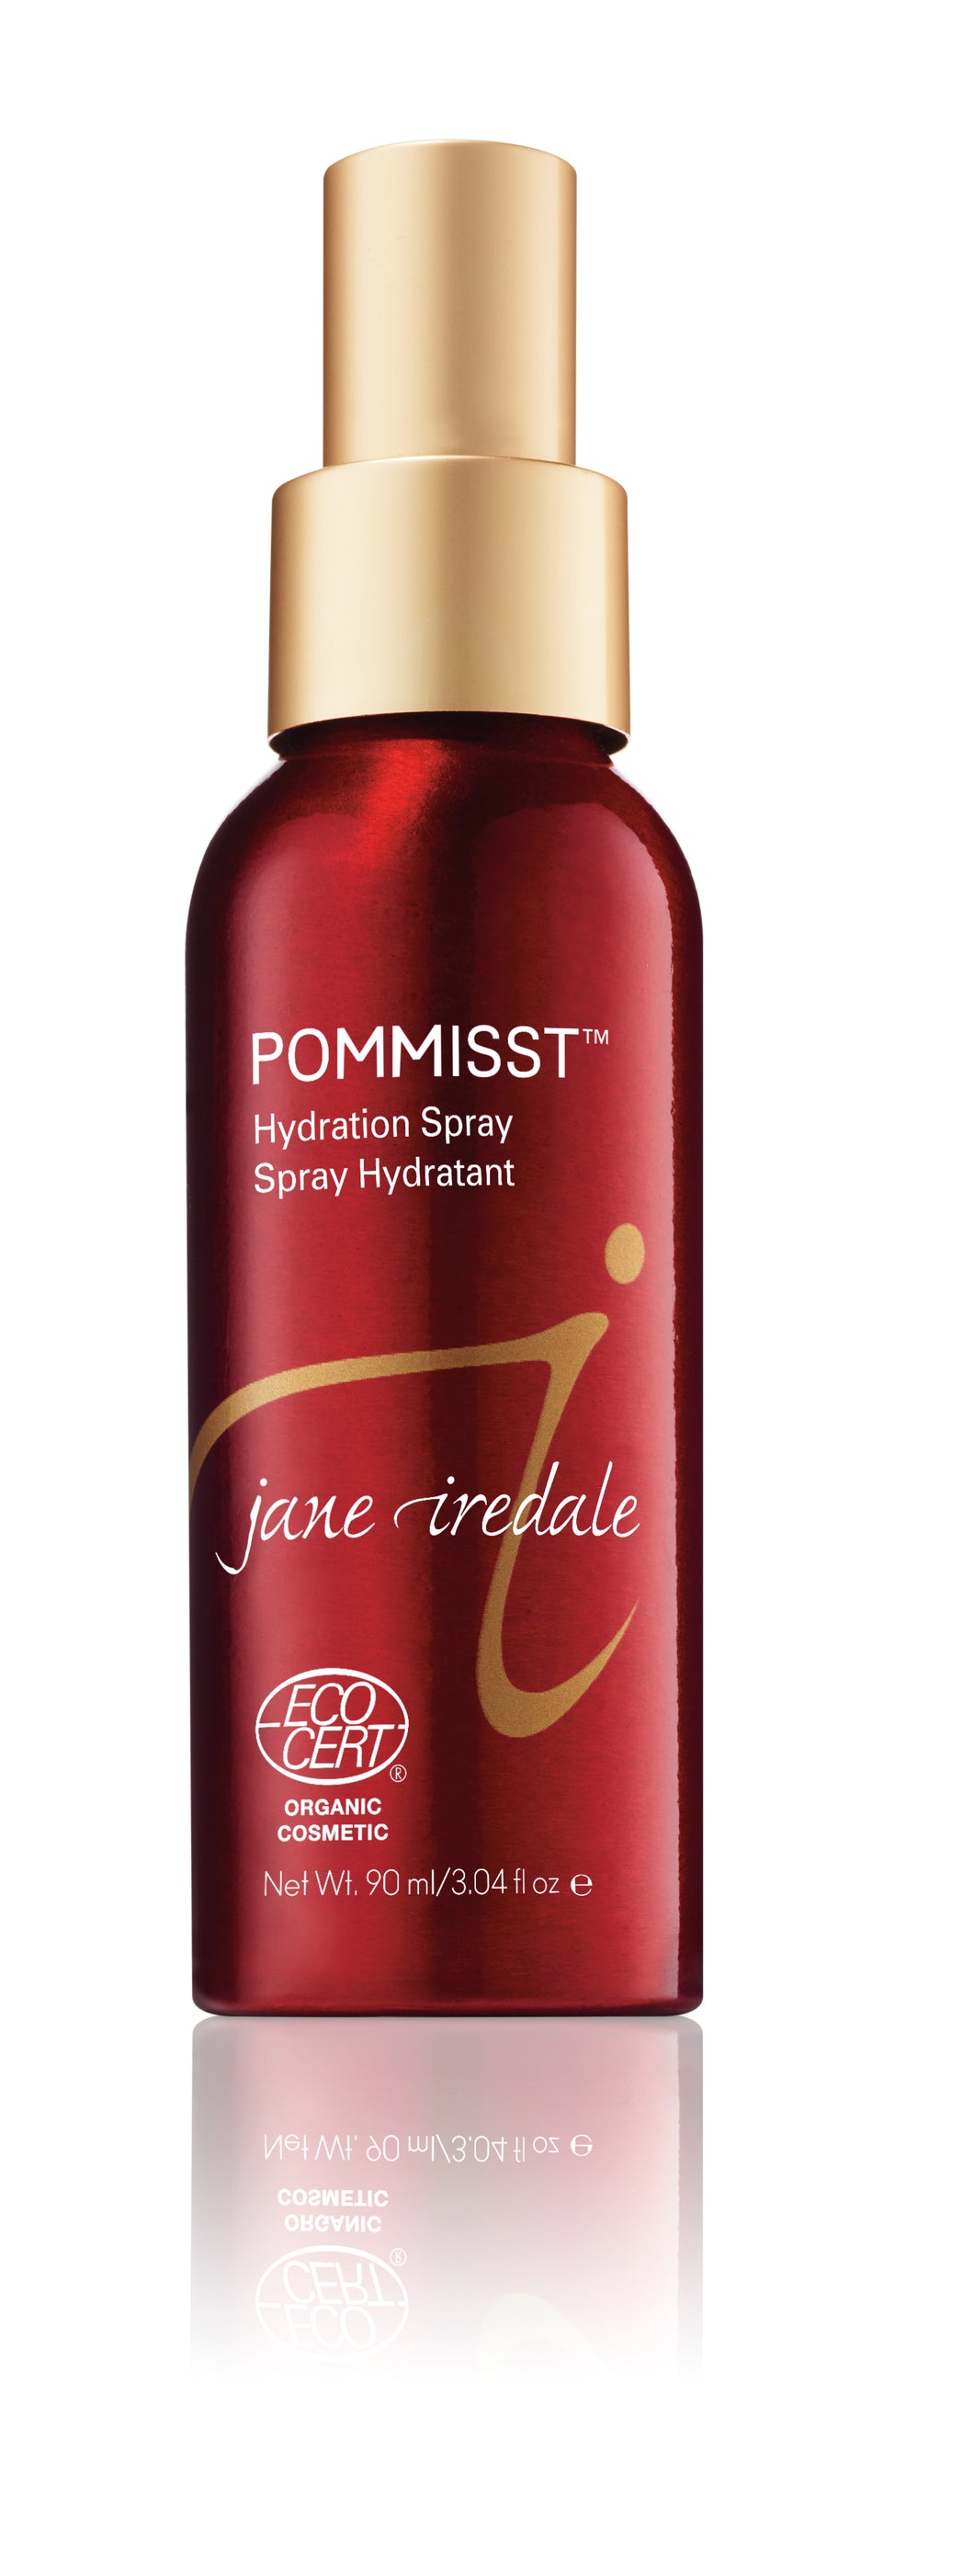 Jane Iredale Pommisst Hydration Spray